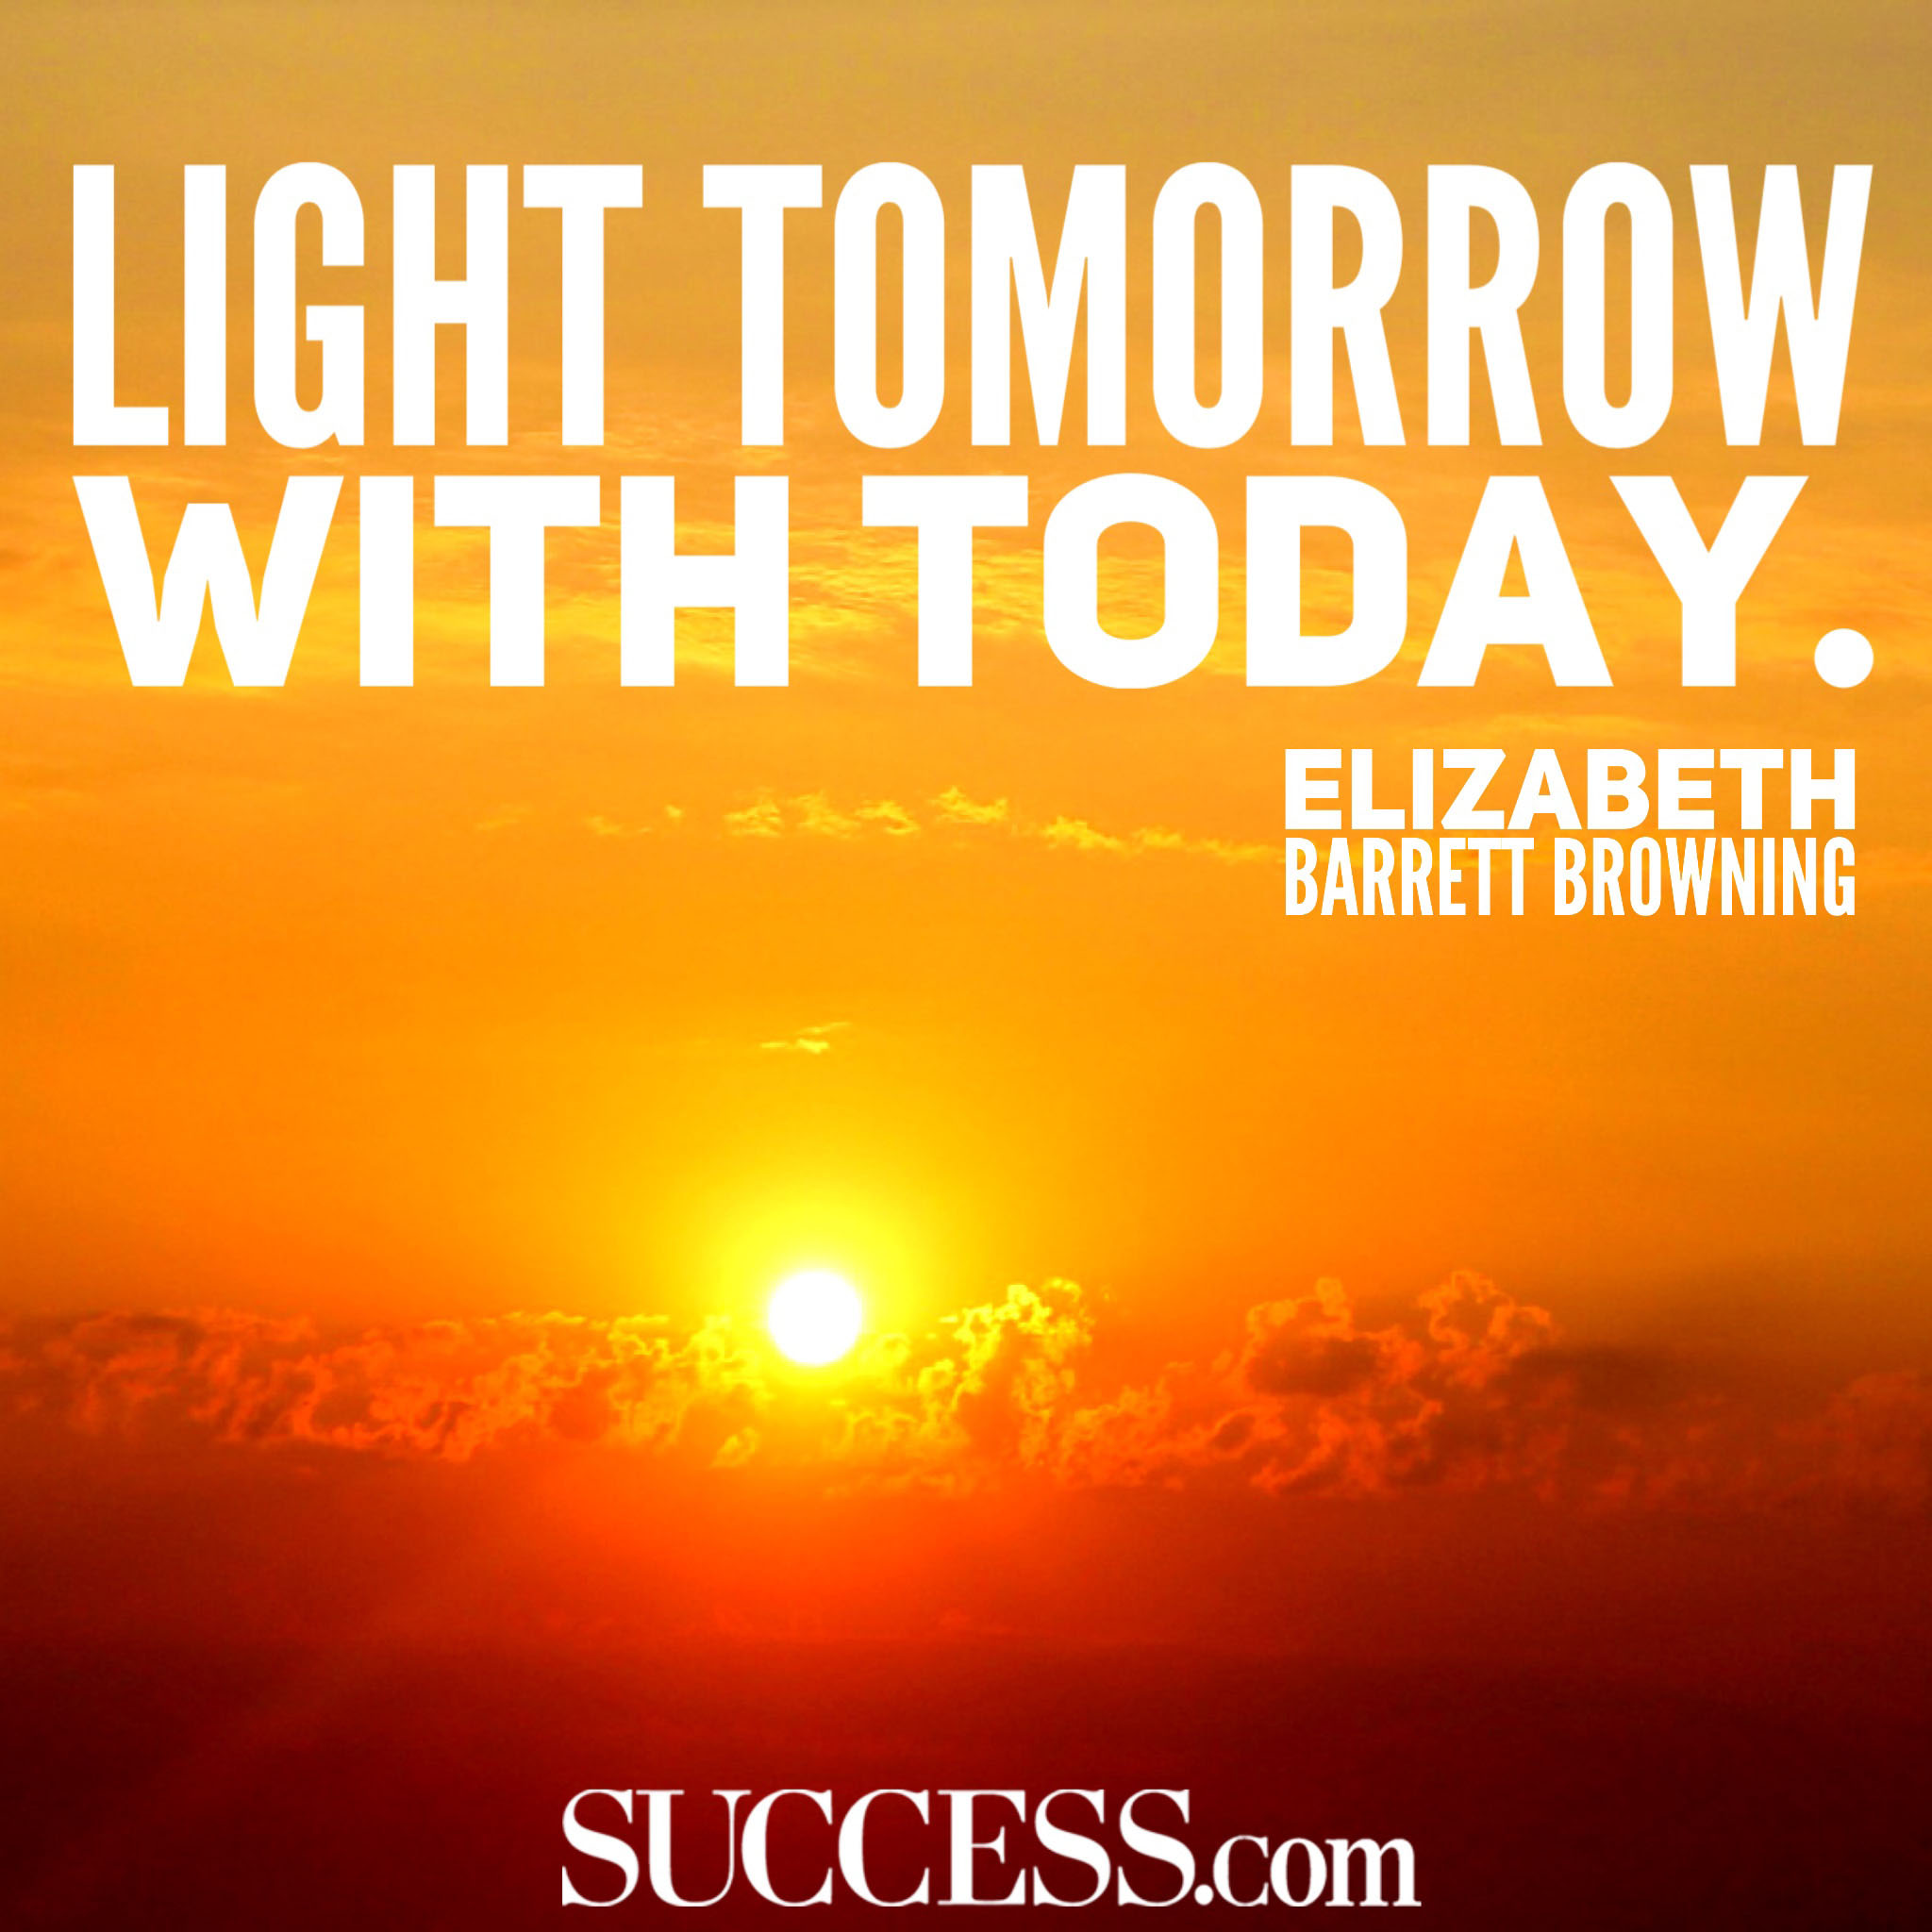 Light tomorrow with today. Elizabeth Barrett Browning